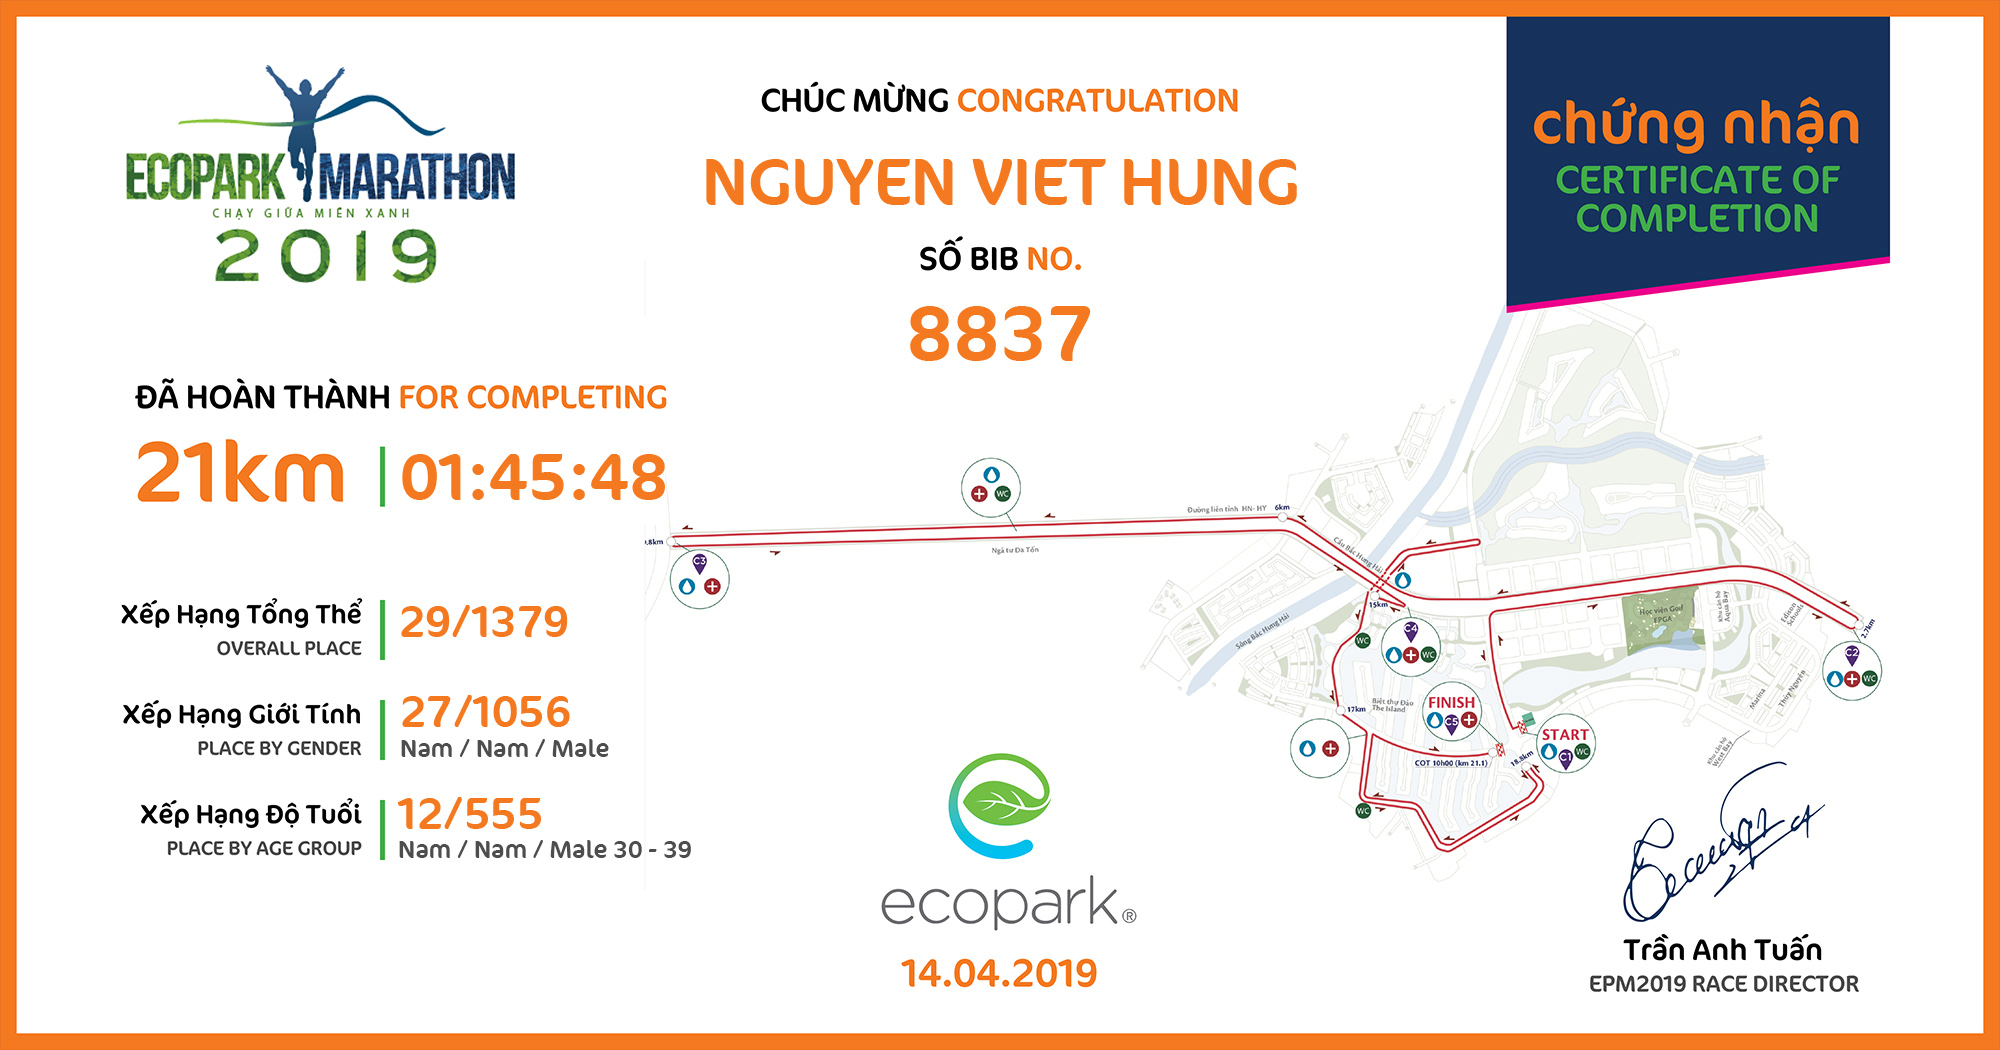 8837 - Nguyen Viet Hung